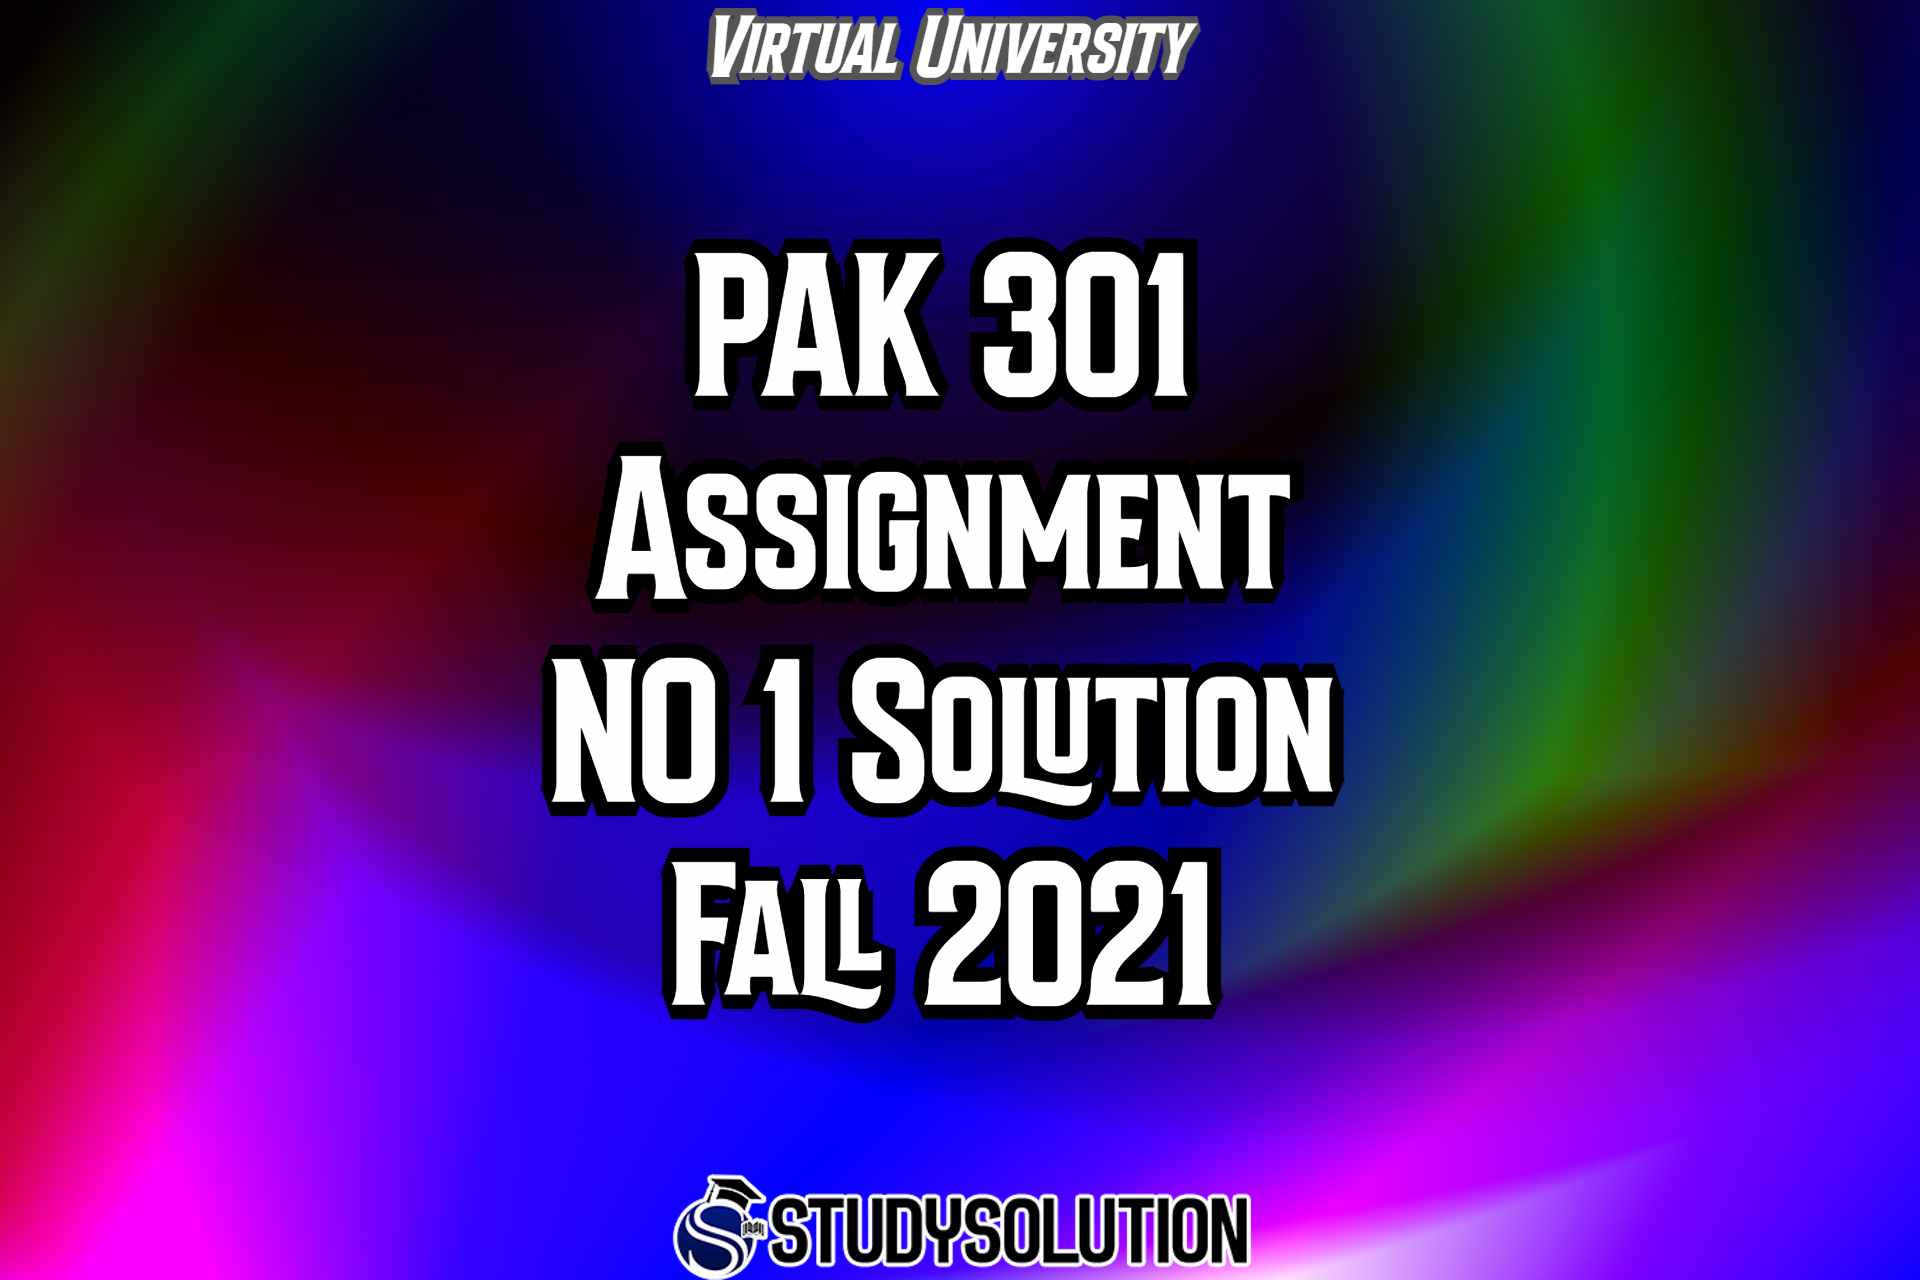 PAK301 Assignment NO 1 Solution Fall 2021